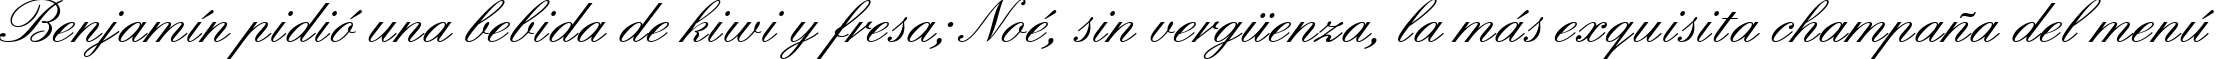 Пример написания шрифтом English 157 BT текста на испанском